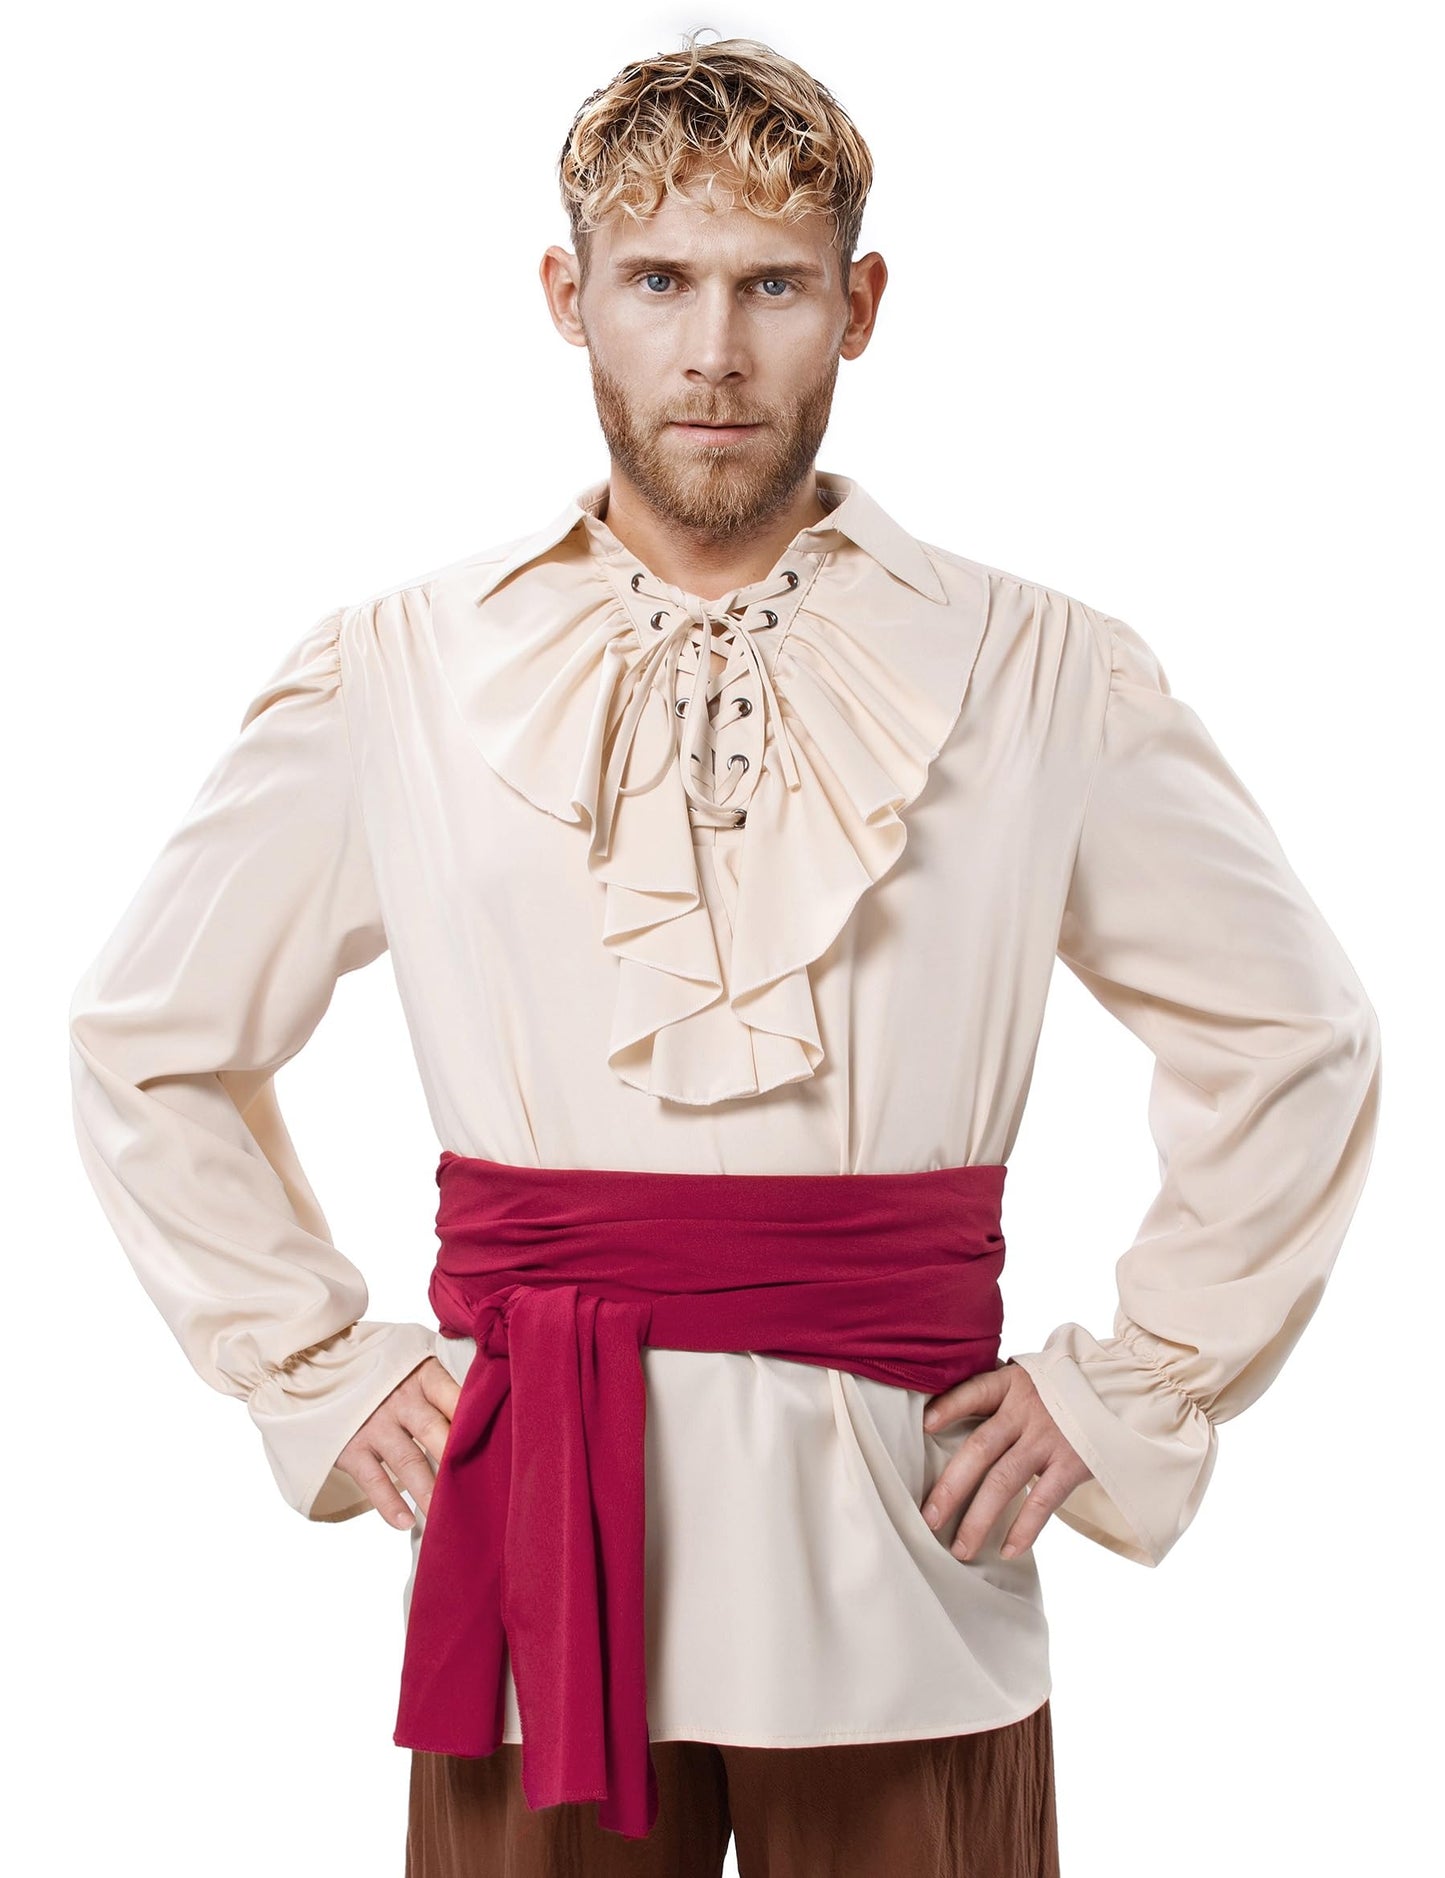 Men's Renaissance Victorian Medieval Pirate Shirt Lace Up Costume Top